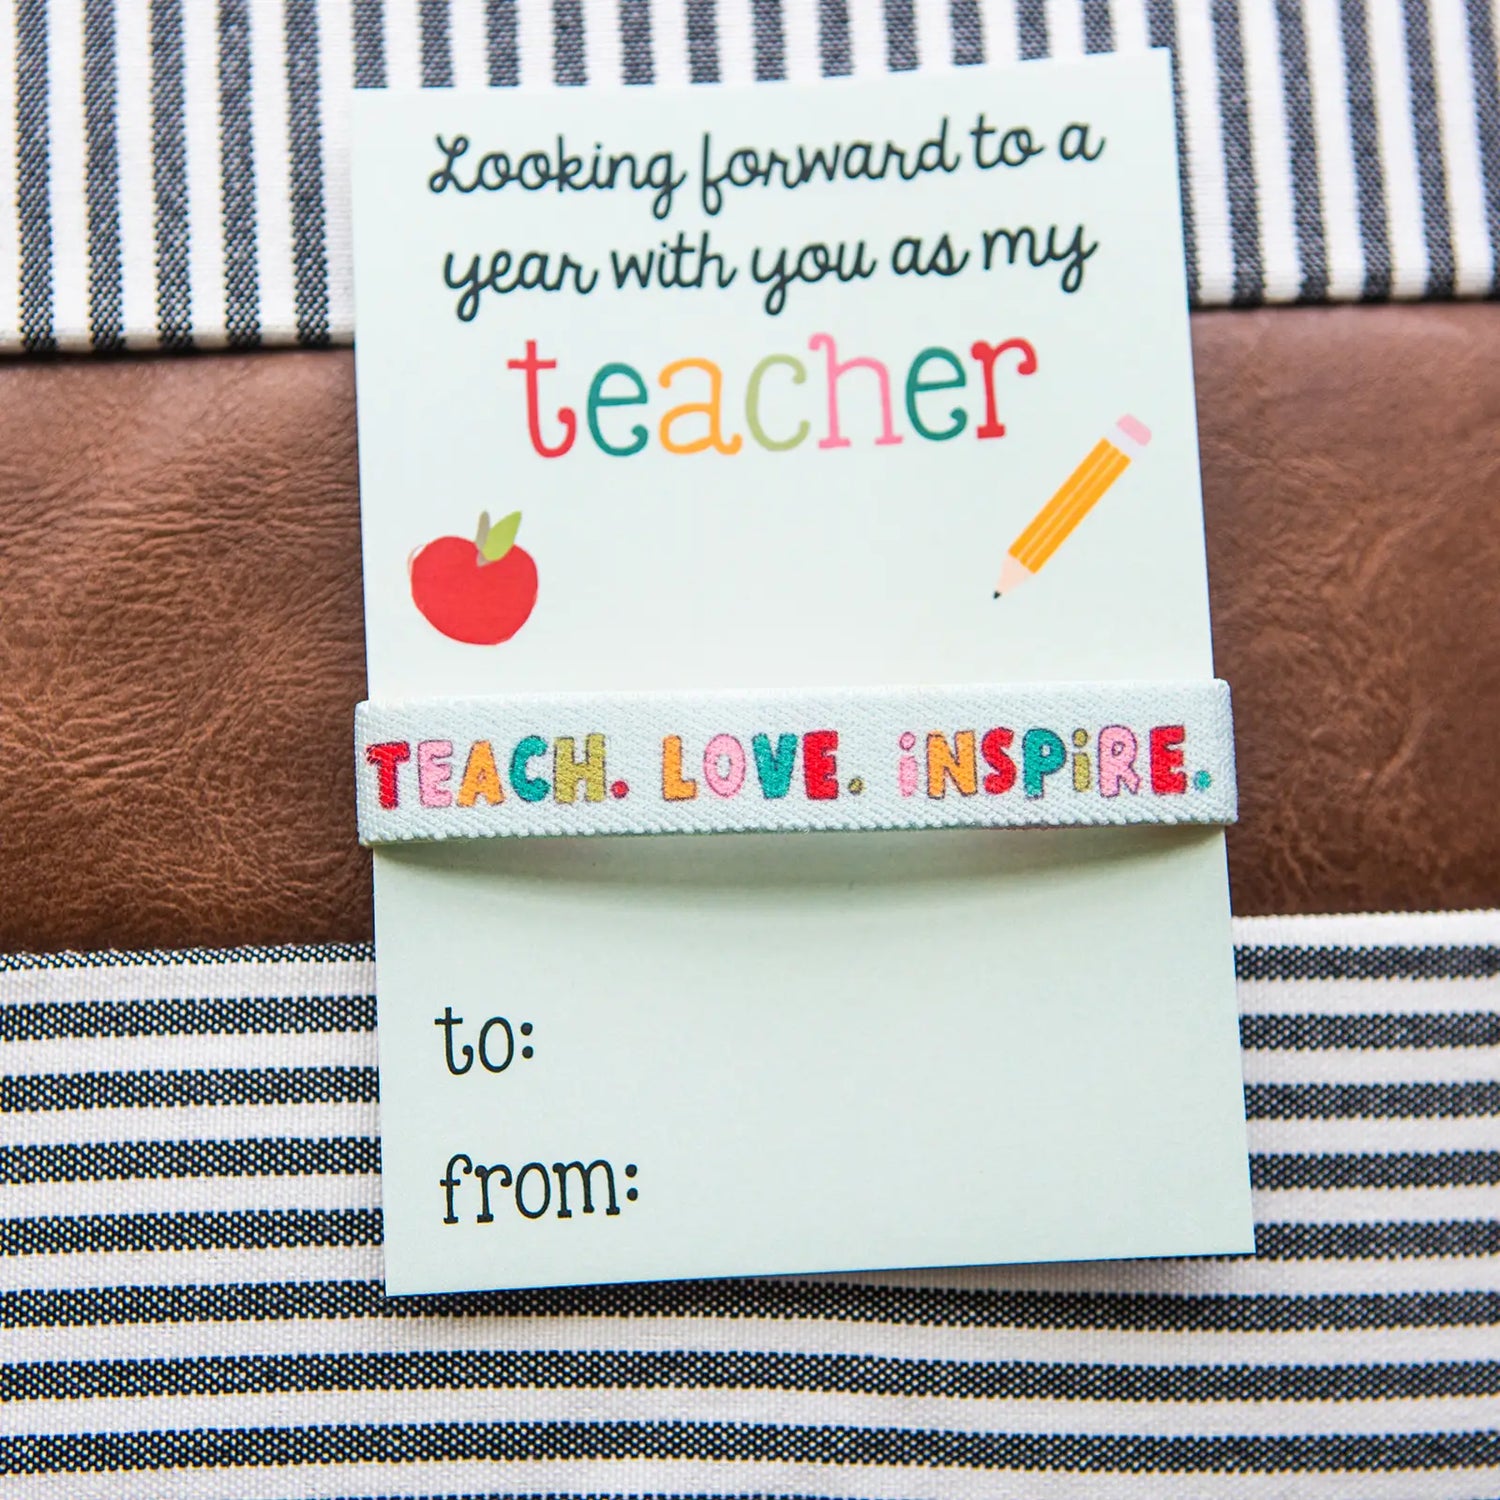 Teach. Love. Inspire.